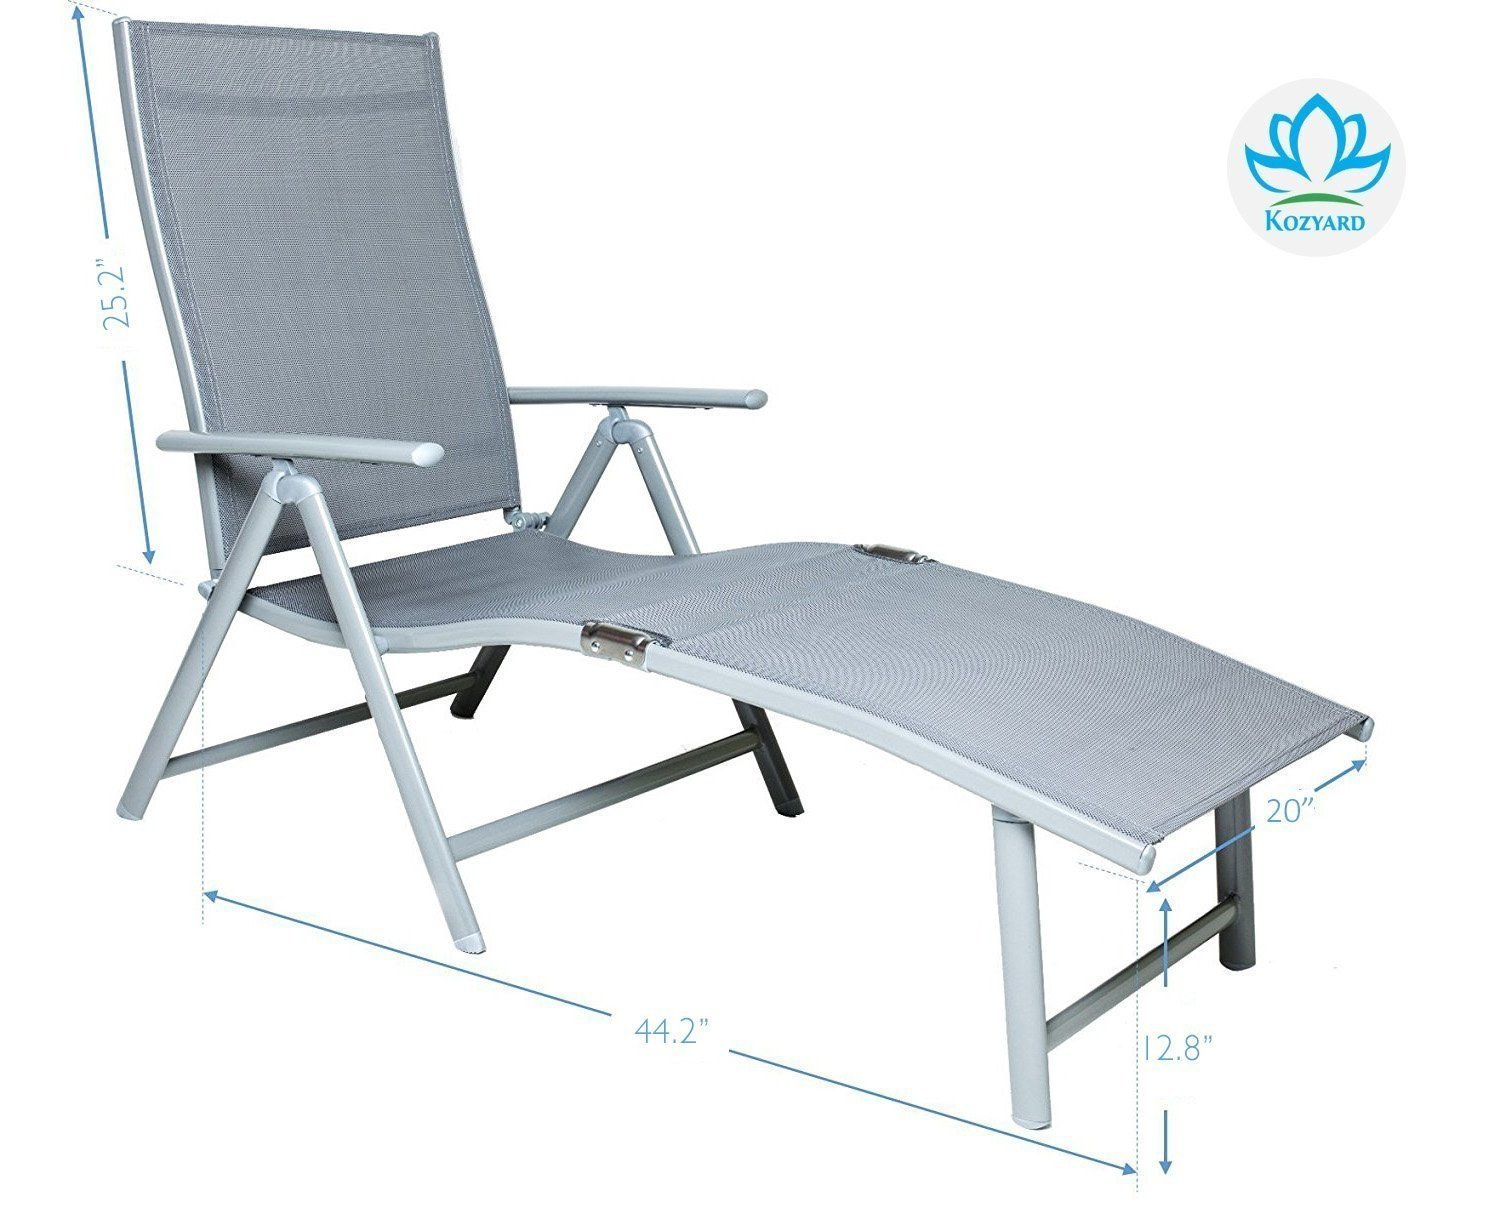 Kozyard Aluminum Beach Yard Pool Adjustable Chaise Lounge Chair ( Gray, 2 Packs) - image 4 of 7